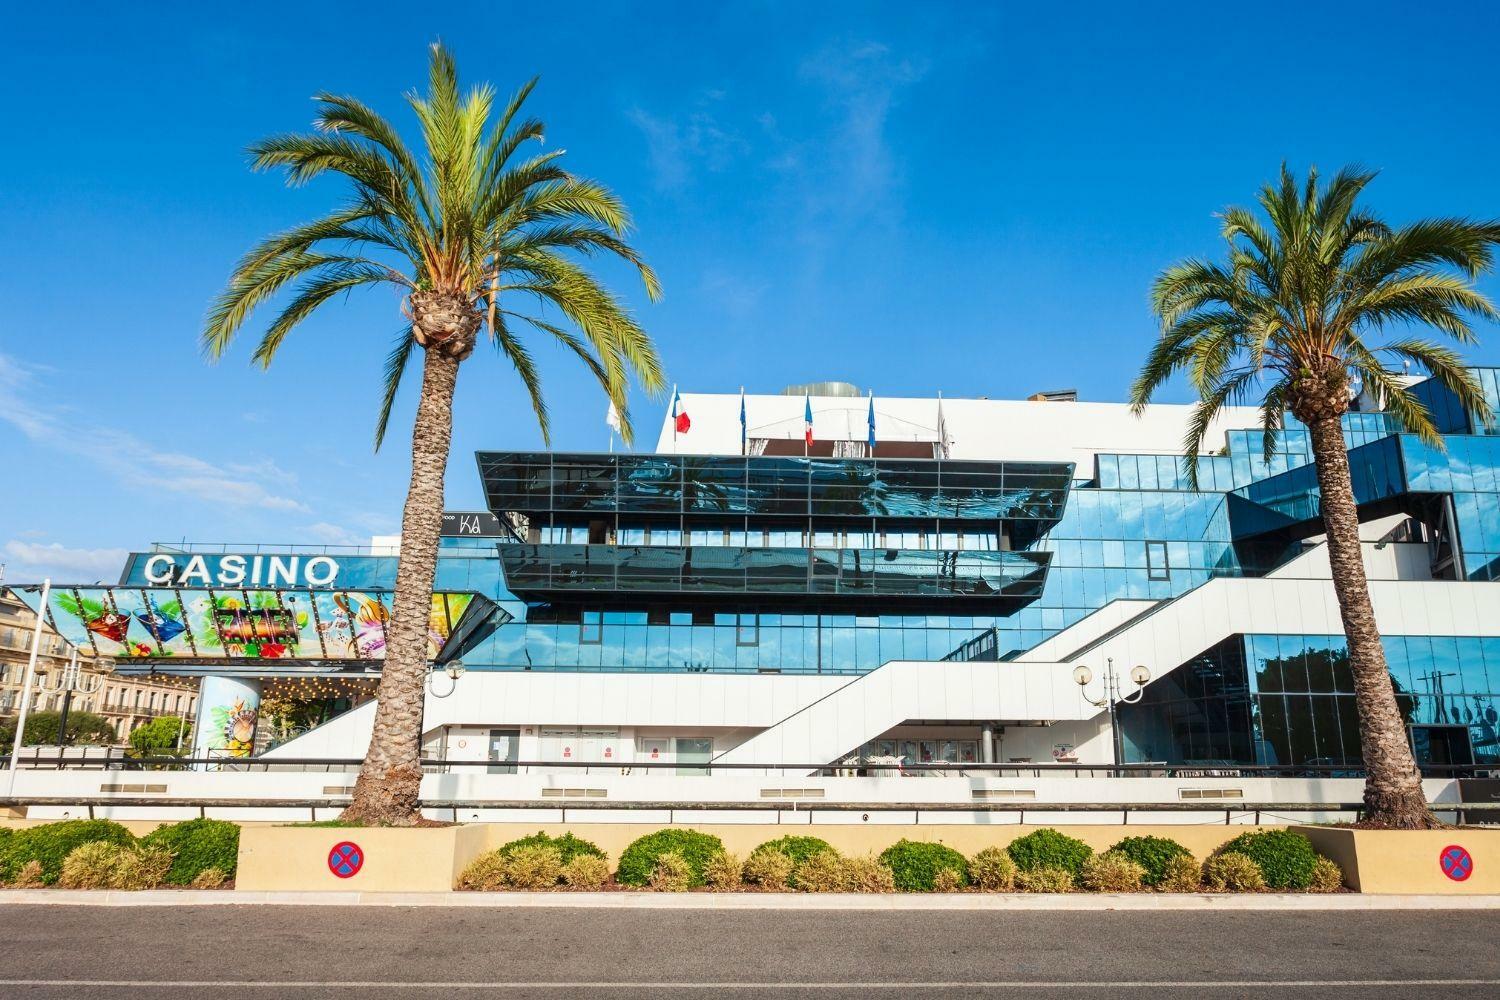 Casino La Croisette Mediterranean Sailing Vacations for 1 day | Signature Sailing Charter